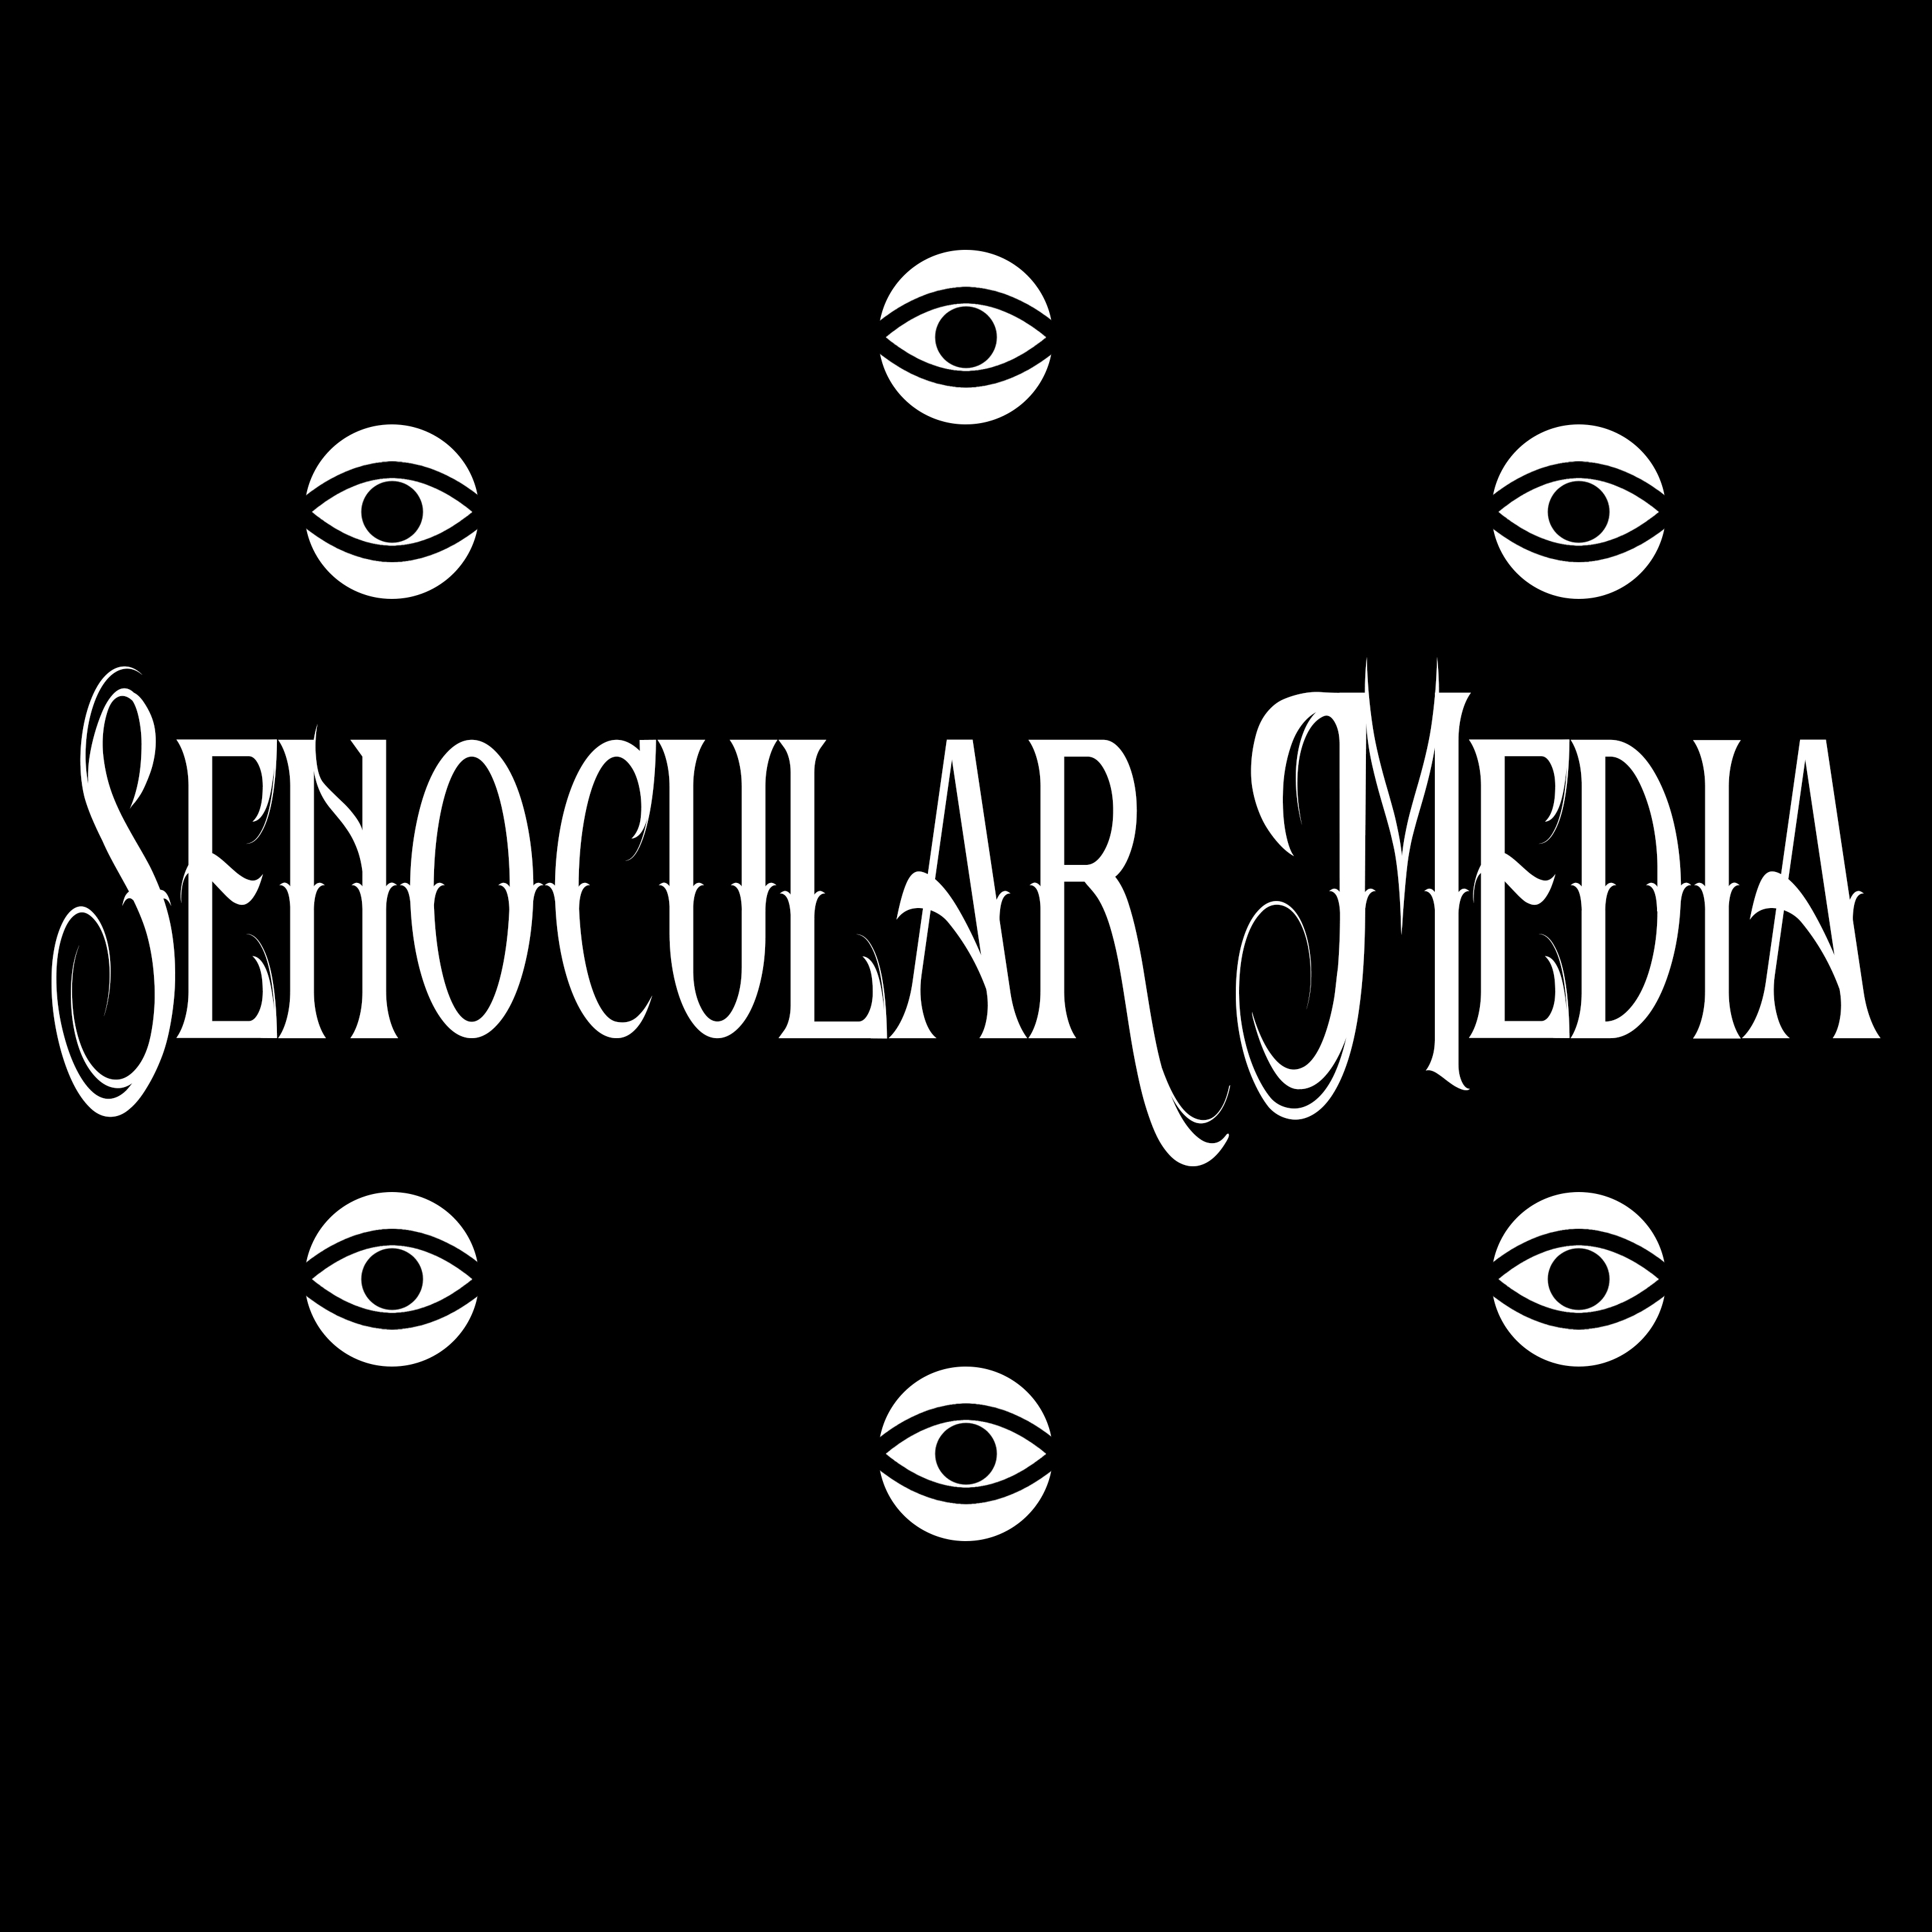 Introducing: Senocular Media!